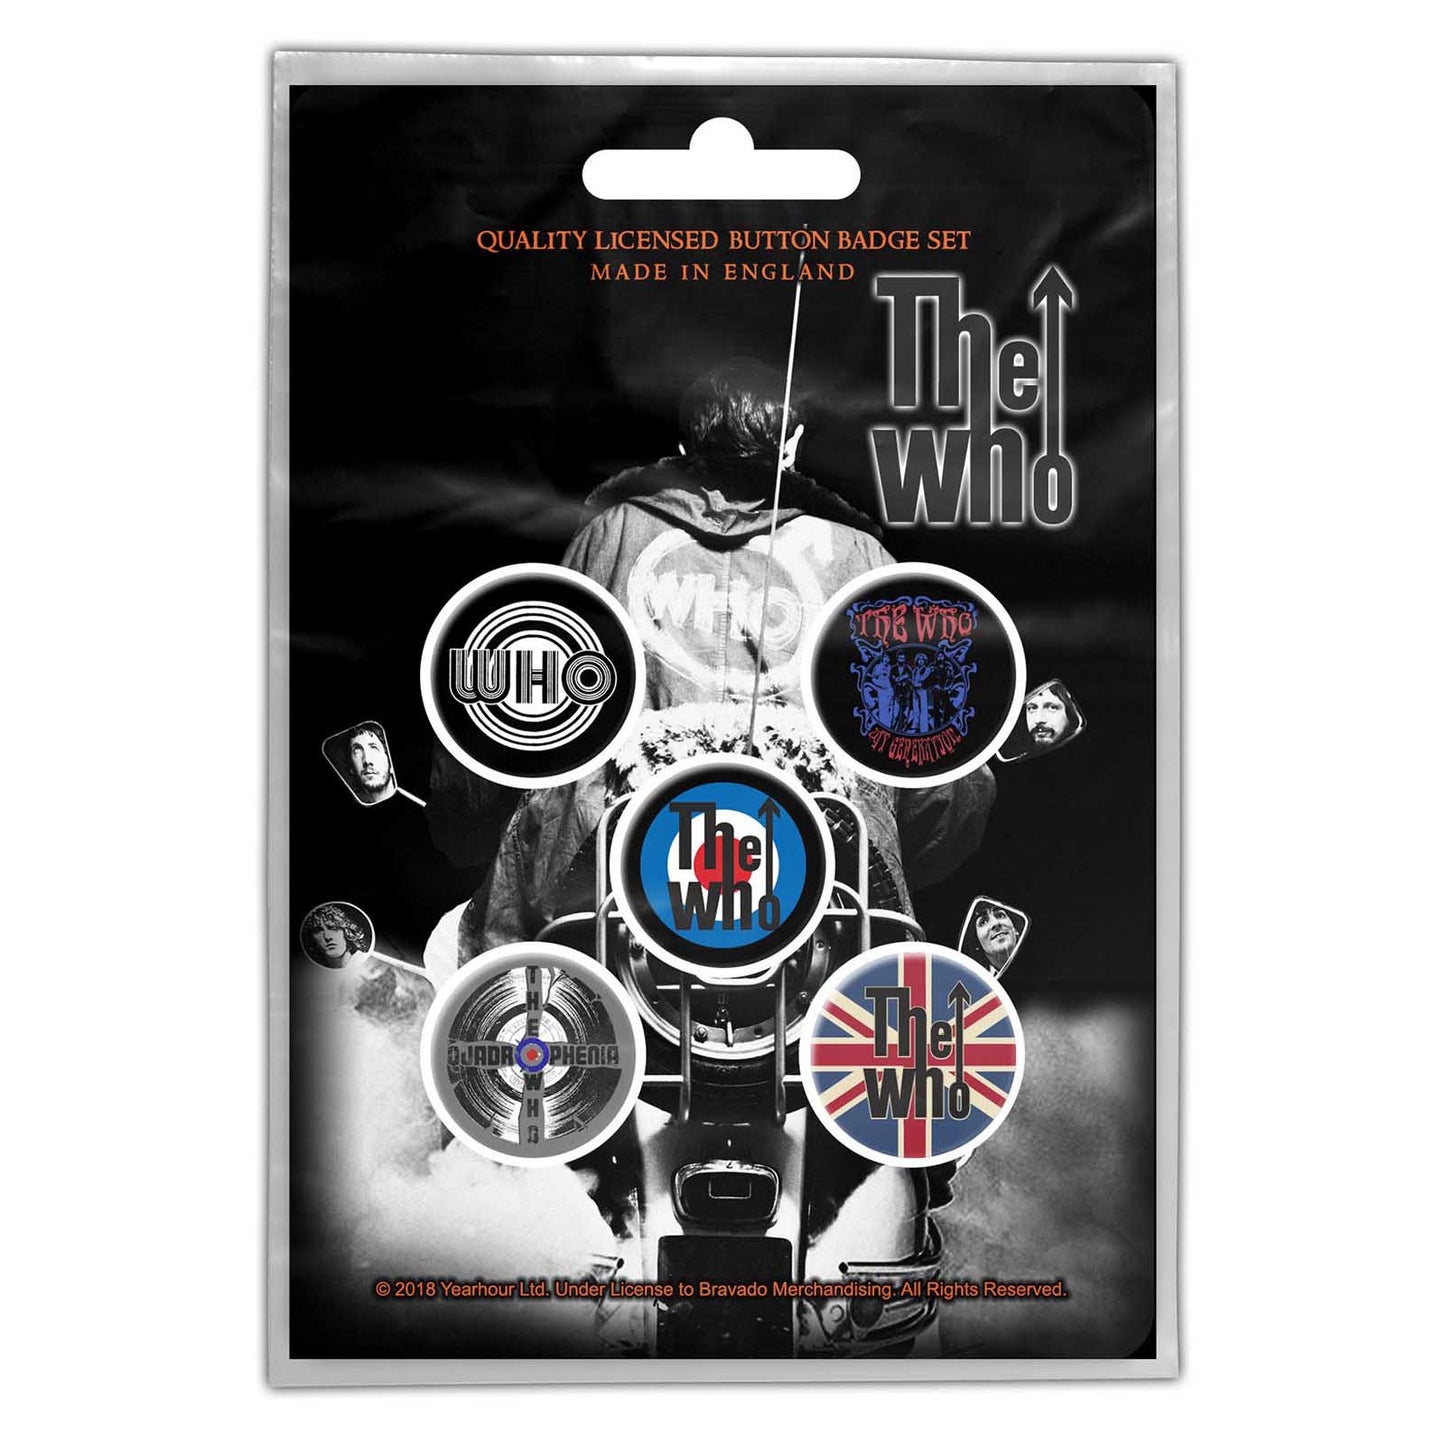 THE WHO - Quadrophenia Badge Pack